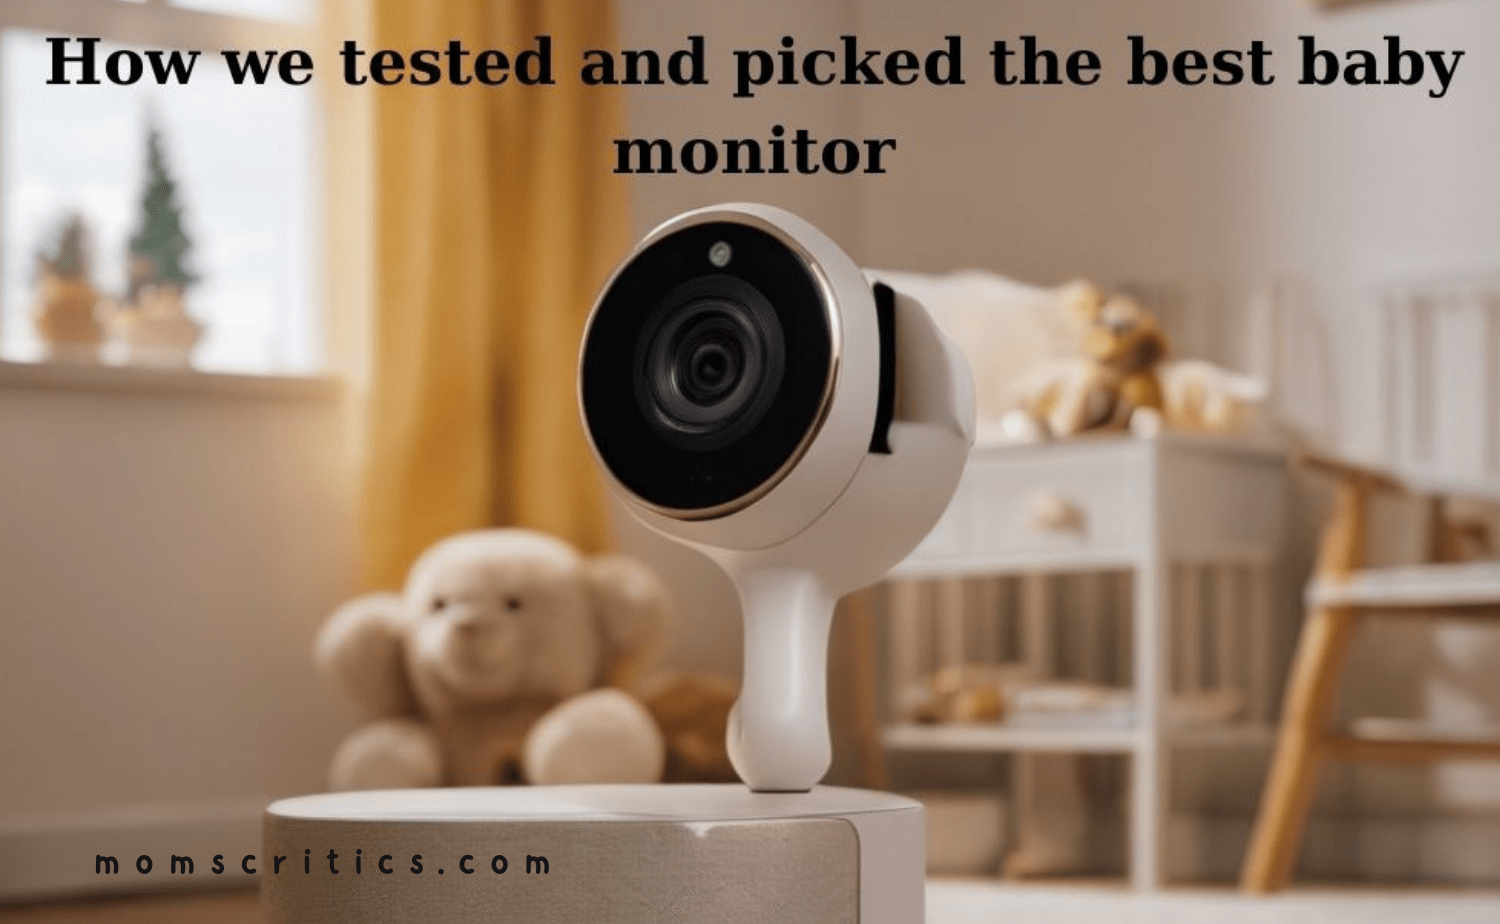 Best Vtech Baby Monitor